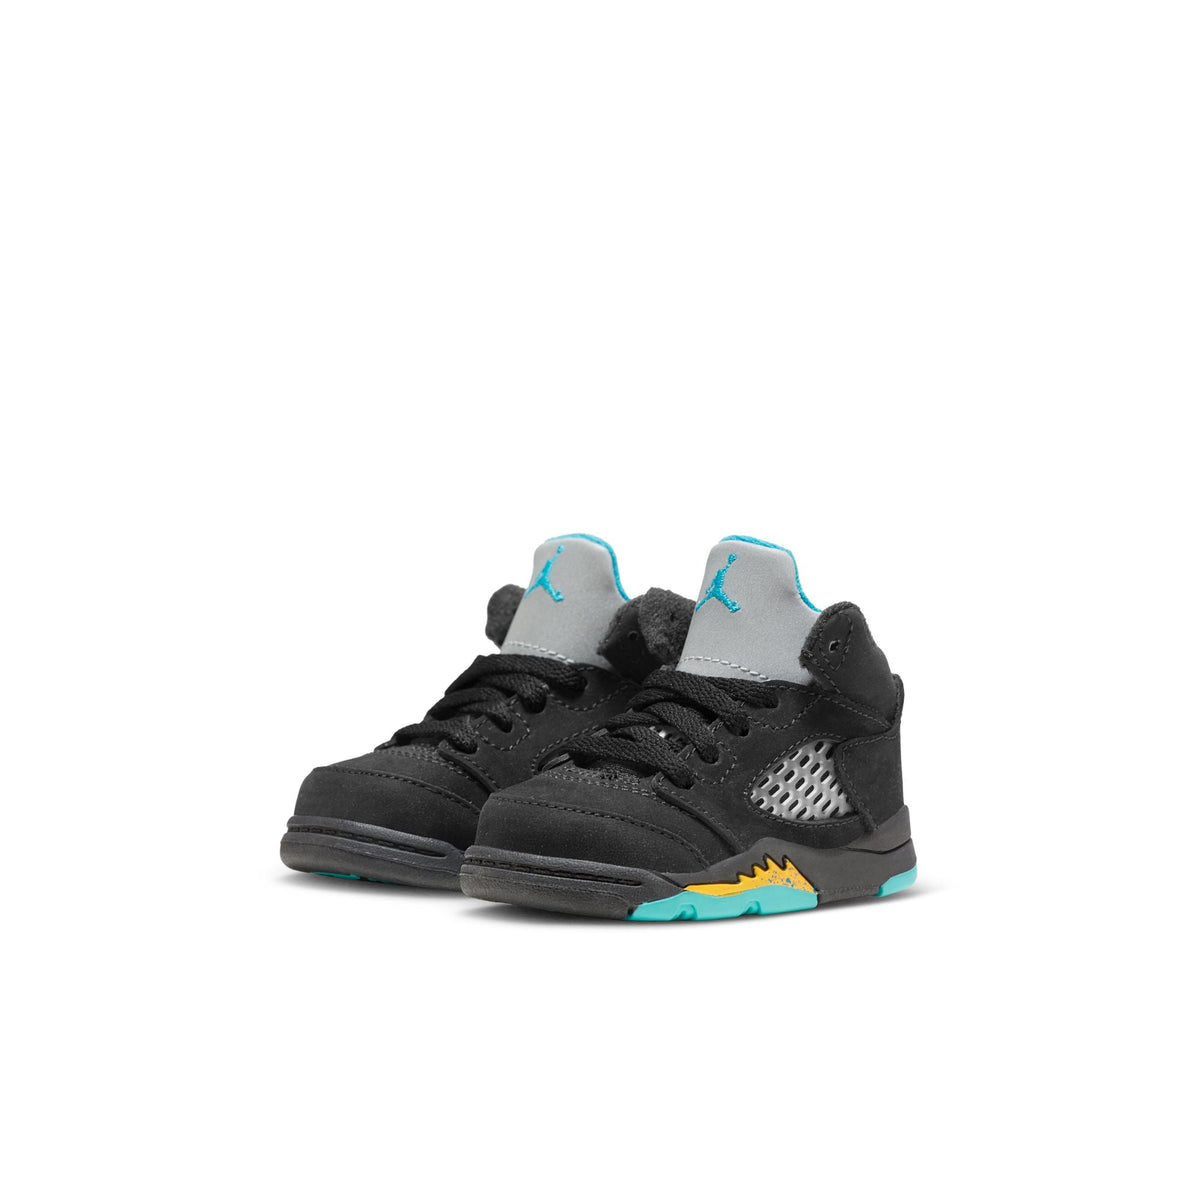 Jordan 5 Retro Infant/Toddler Shoe